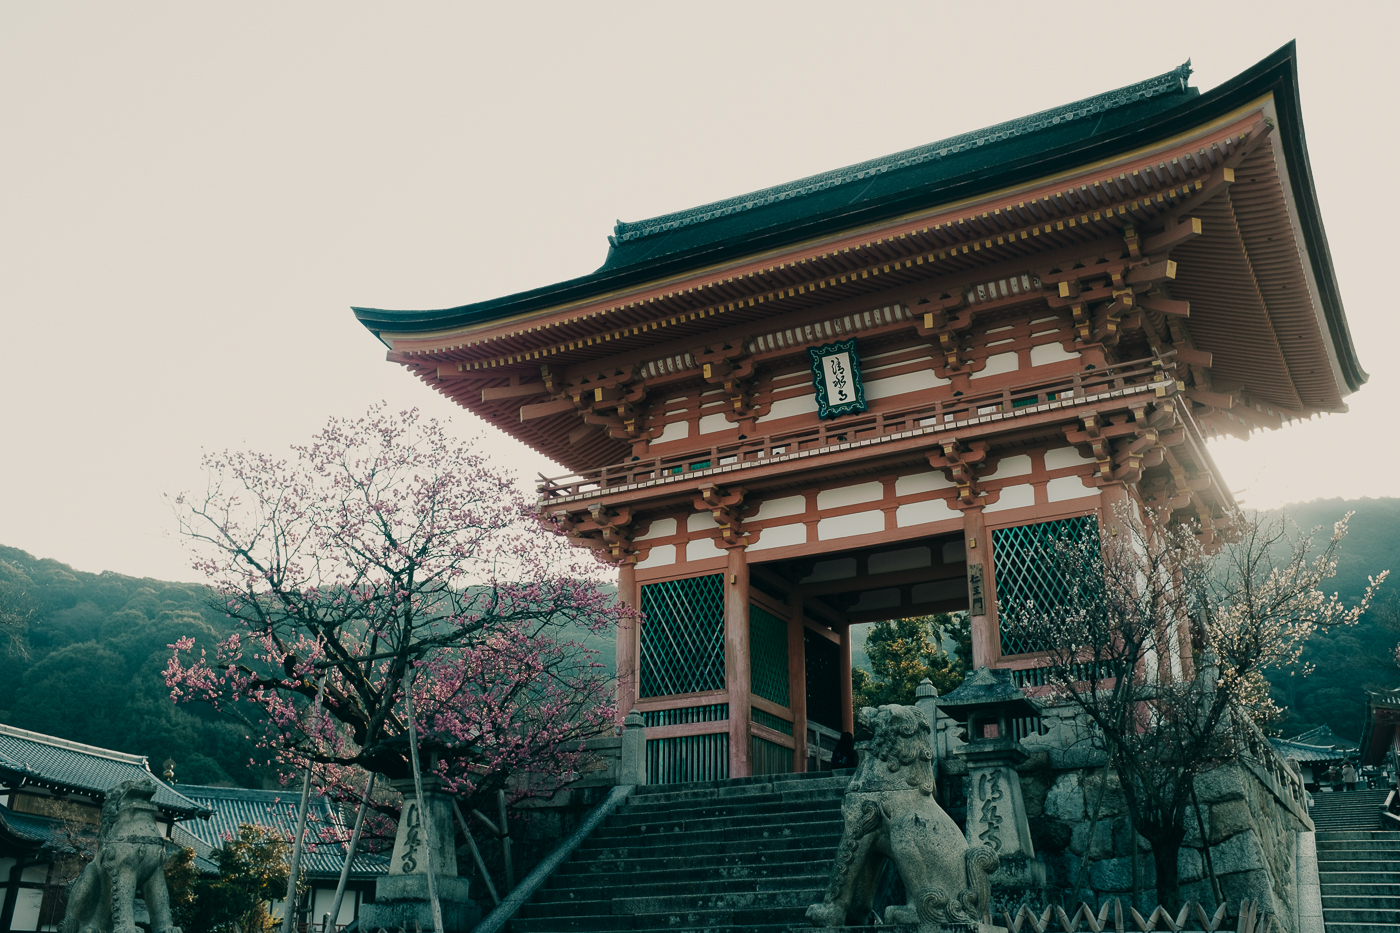 le Kiyomizu Dera, temple emblématique de Kyoto